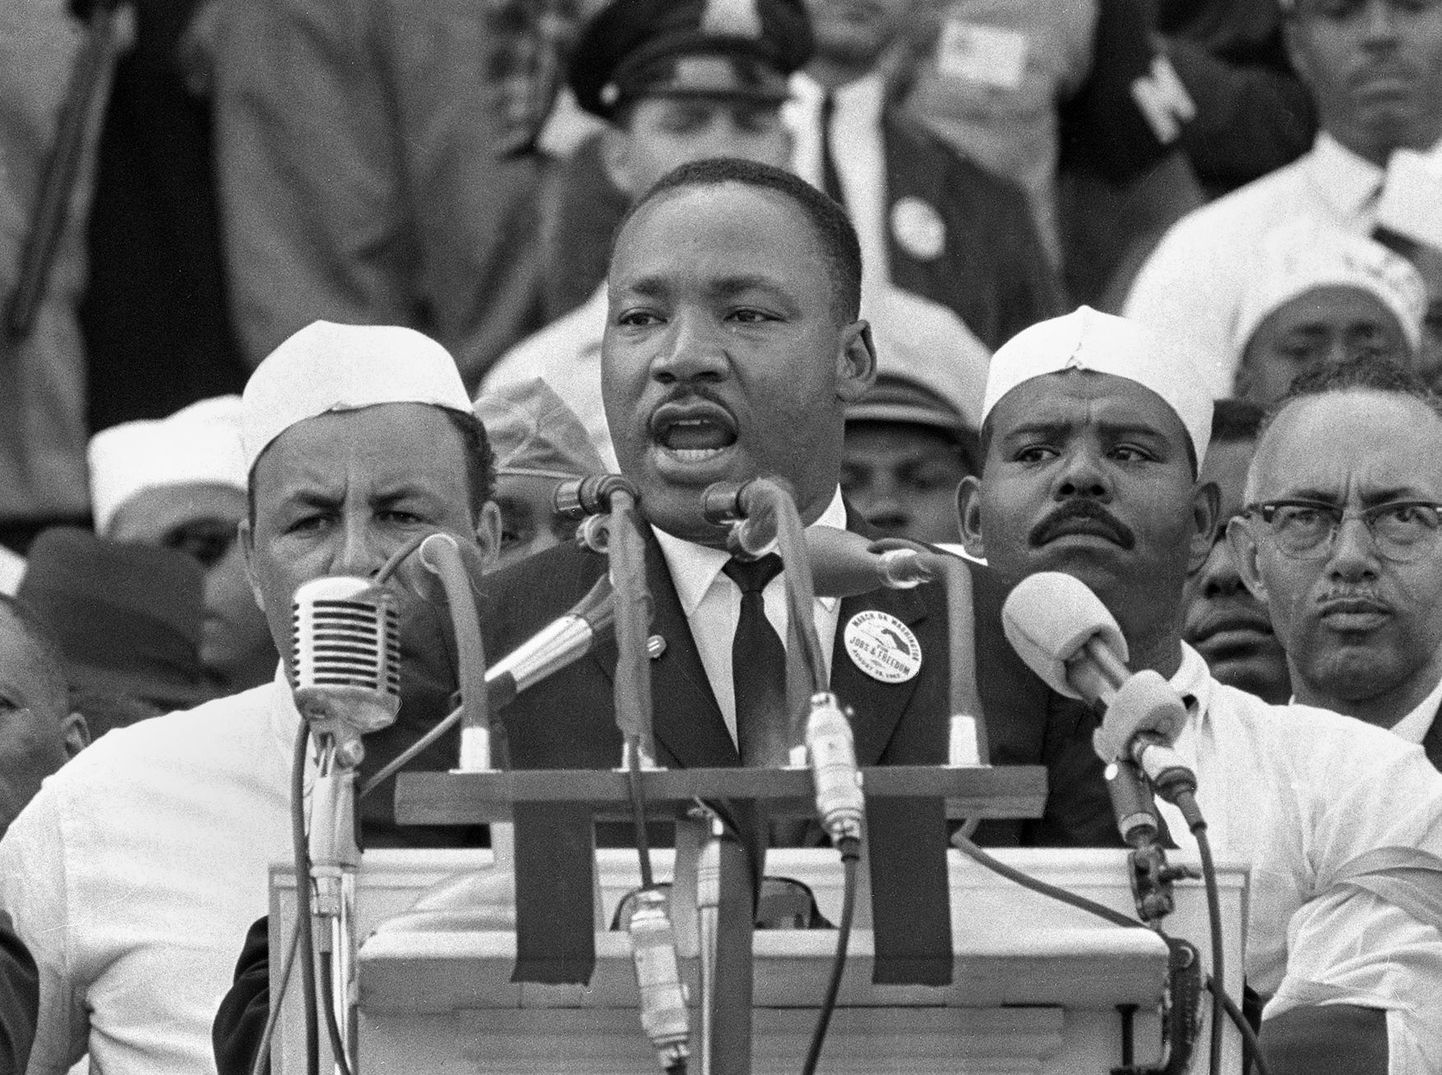 Martin Luther King 1968. aasta 28. augustil kõnet pidamas.